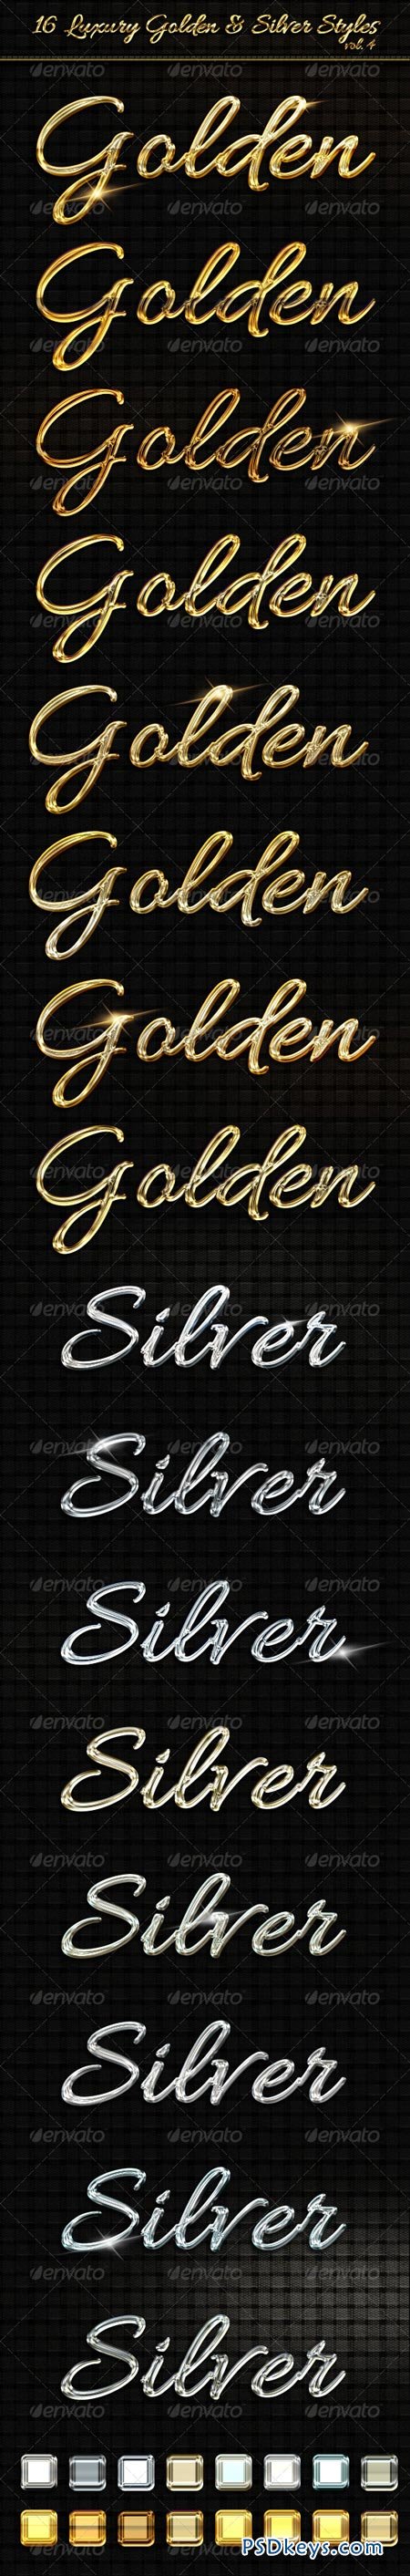 16 Luxury Golden & Silver Text Styles vol4 6559837